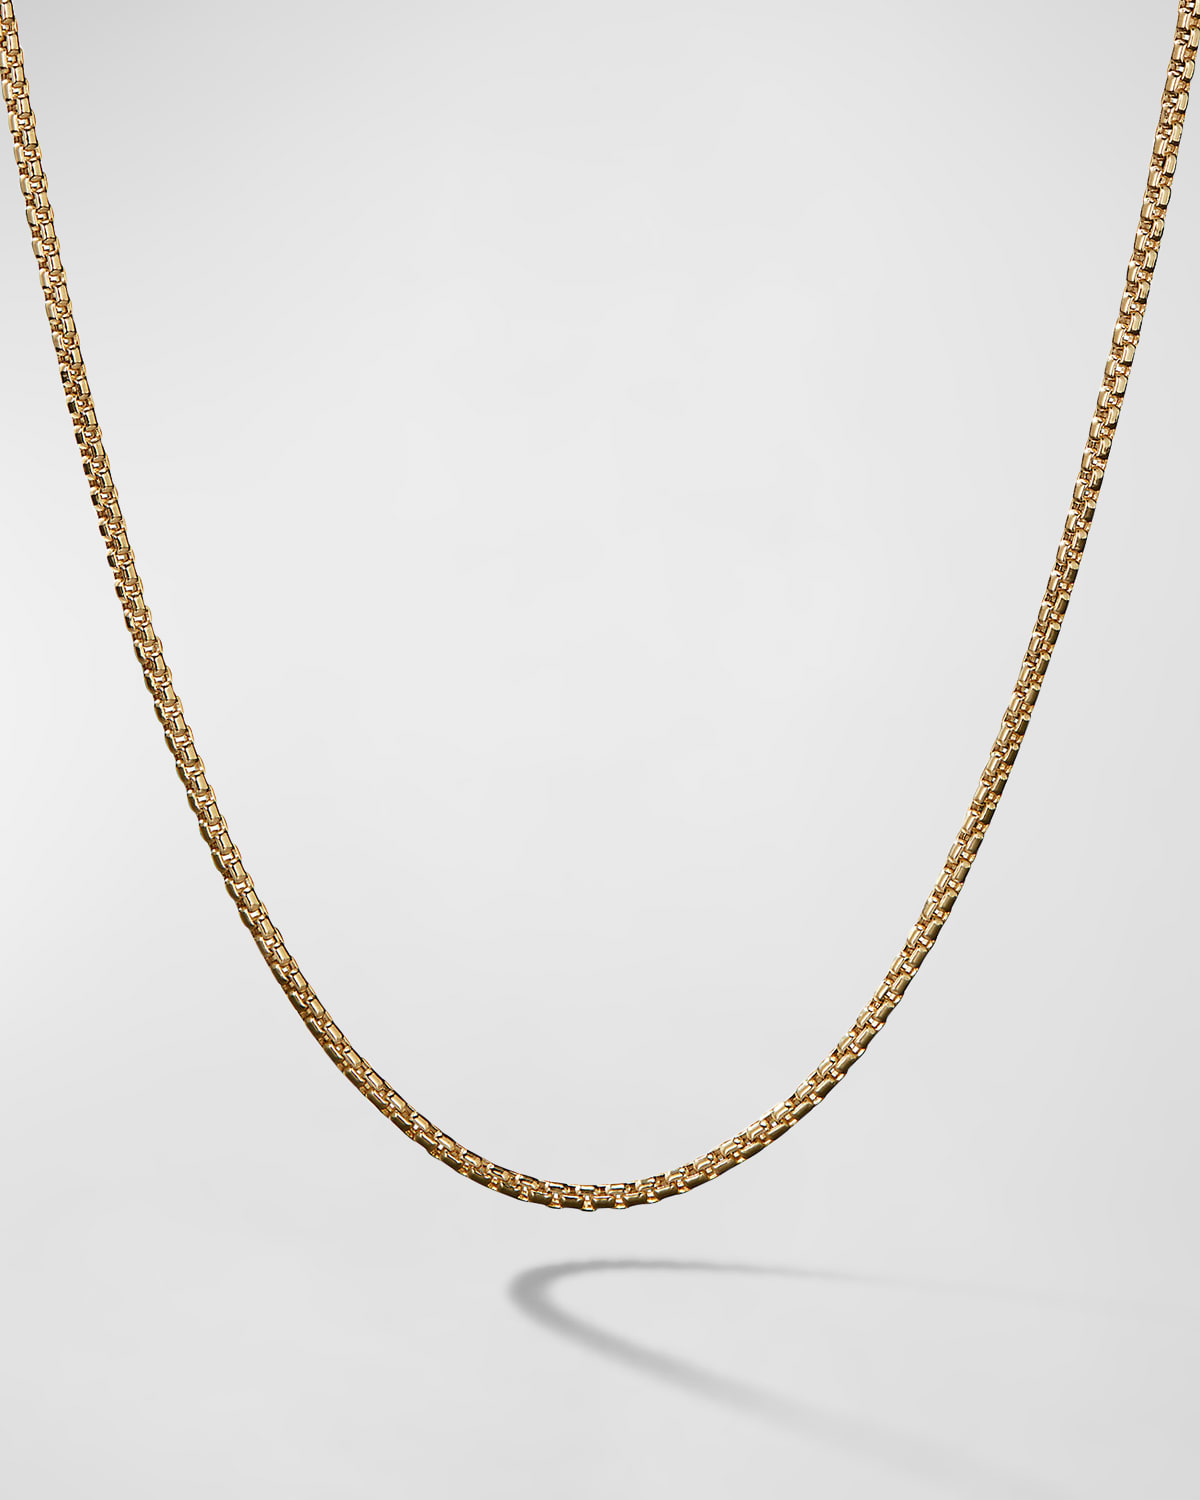 David Yurman Men's Box Chain Necklace In 18k Gold, 1.7mm, 26"l